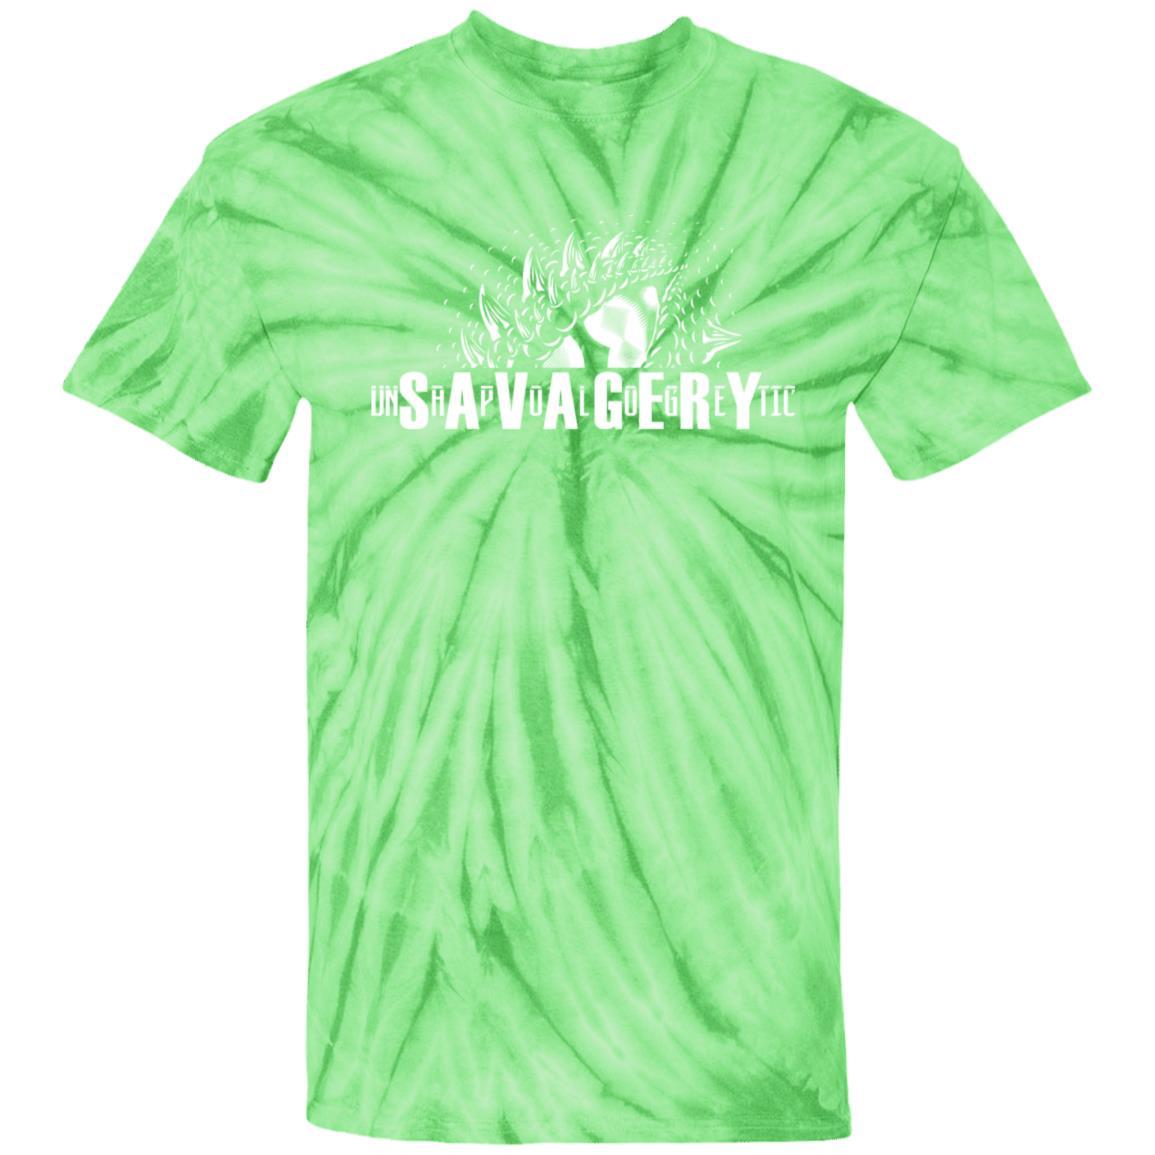 Unapologetic Savagery 100% Cotton Tie Dye T-Shirt CustomCat